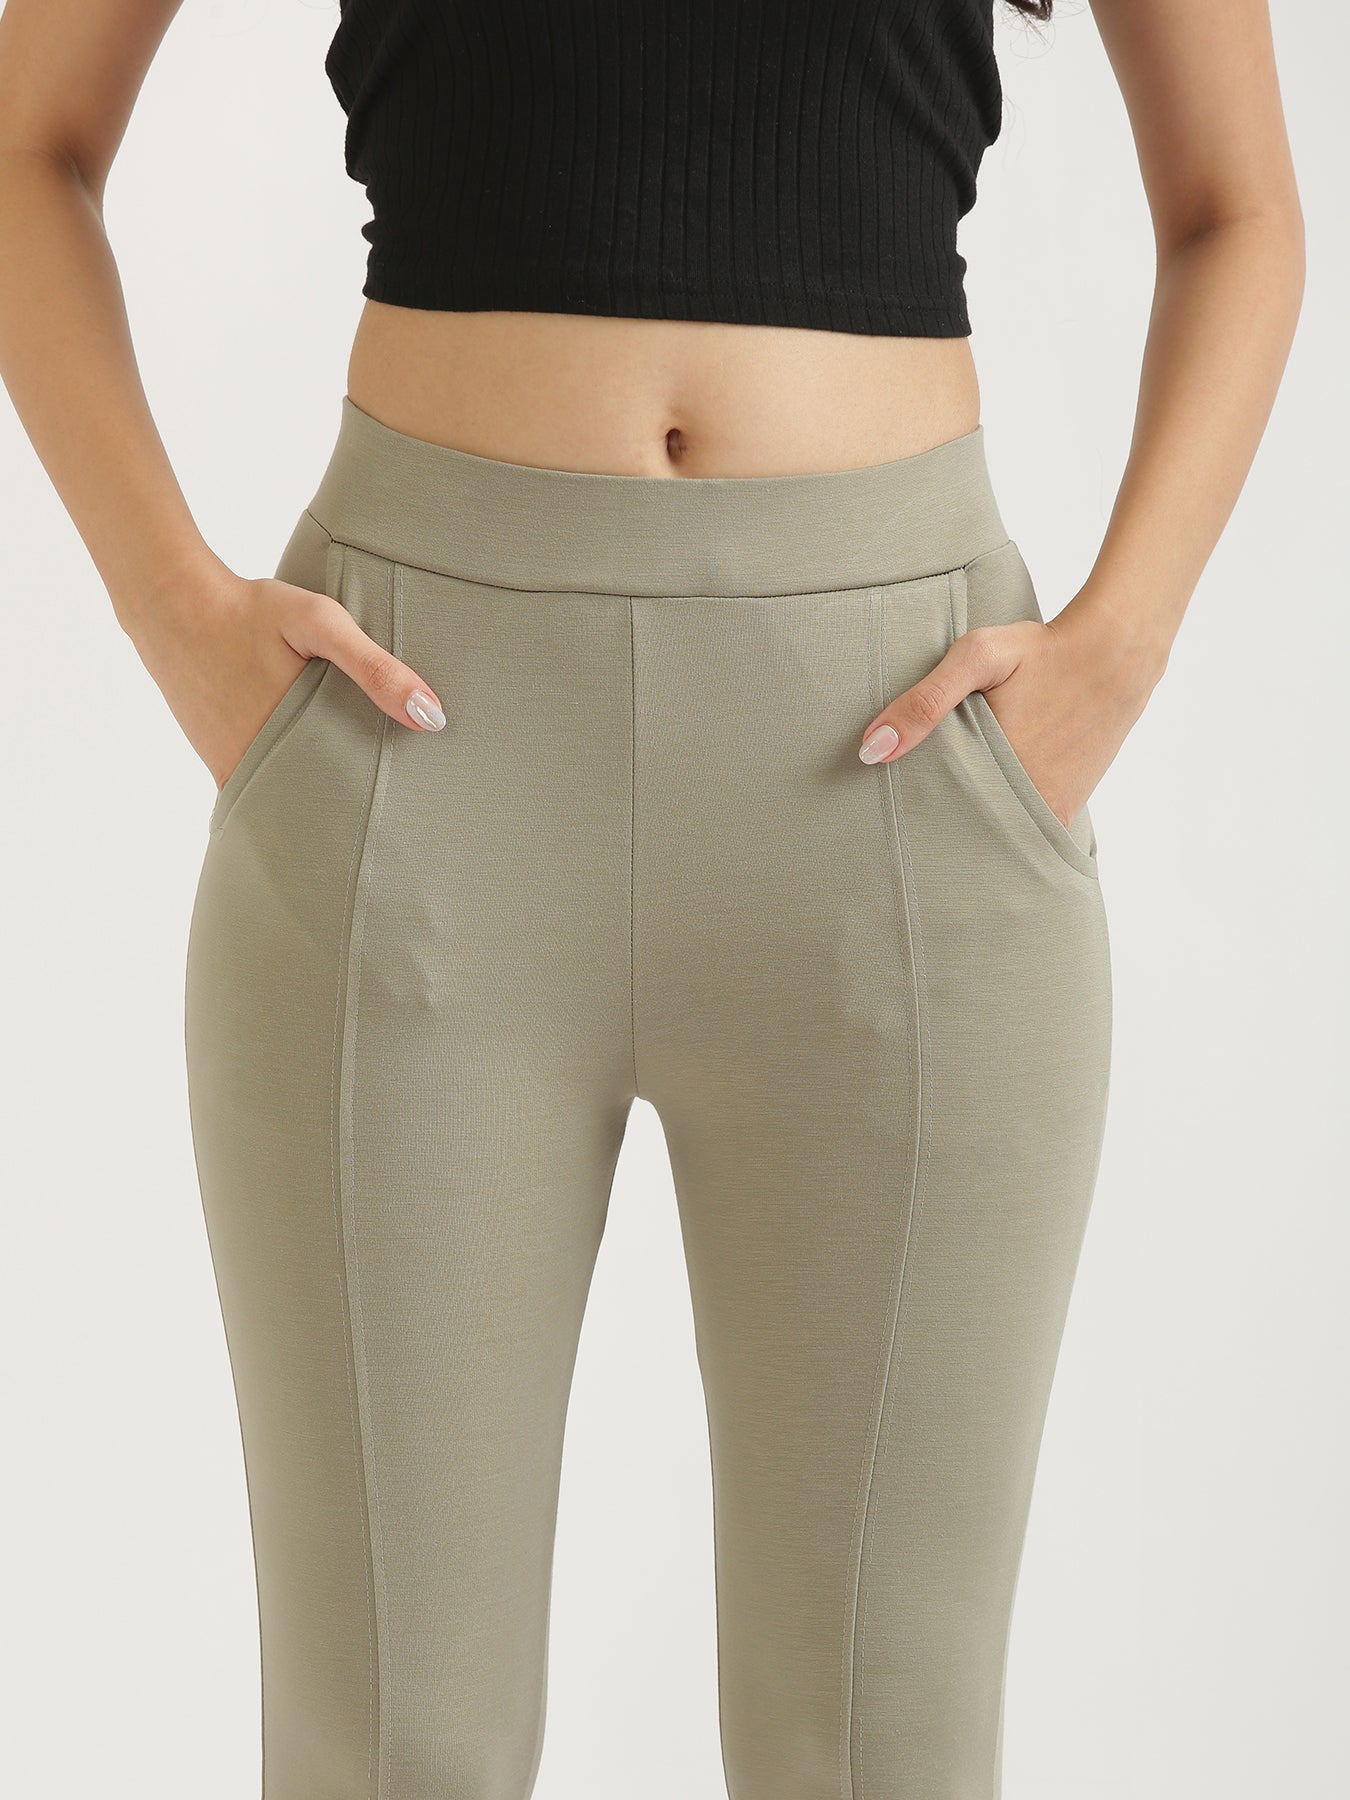 Mint Green 4-Way Stretchable Pants